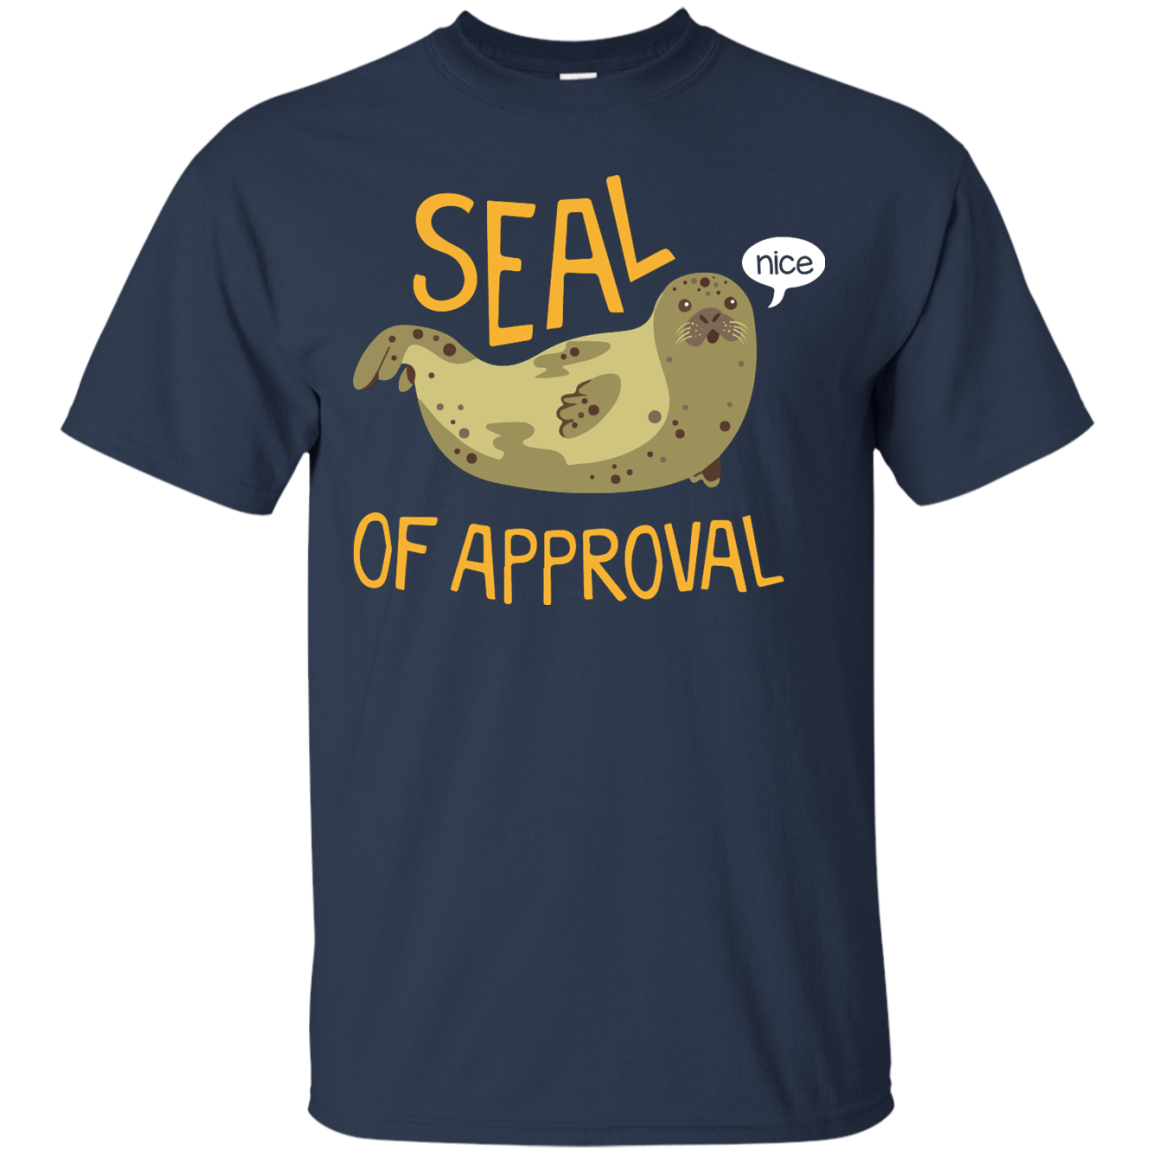 T me approved cc. Футболка Iowa. USA Wrestling футболка. Iowa Wrestling свитшот. Футболка Seal of approval.